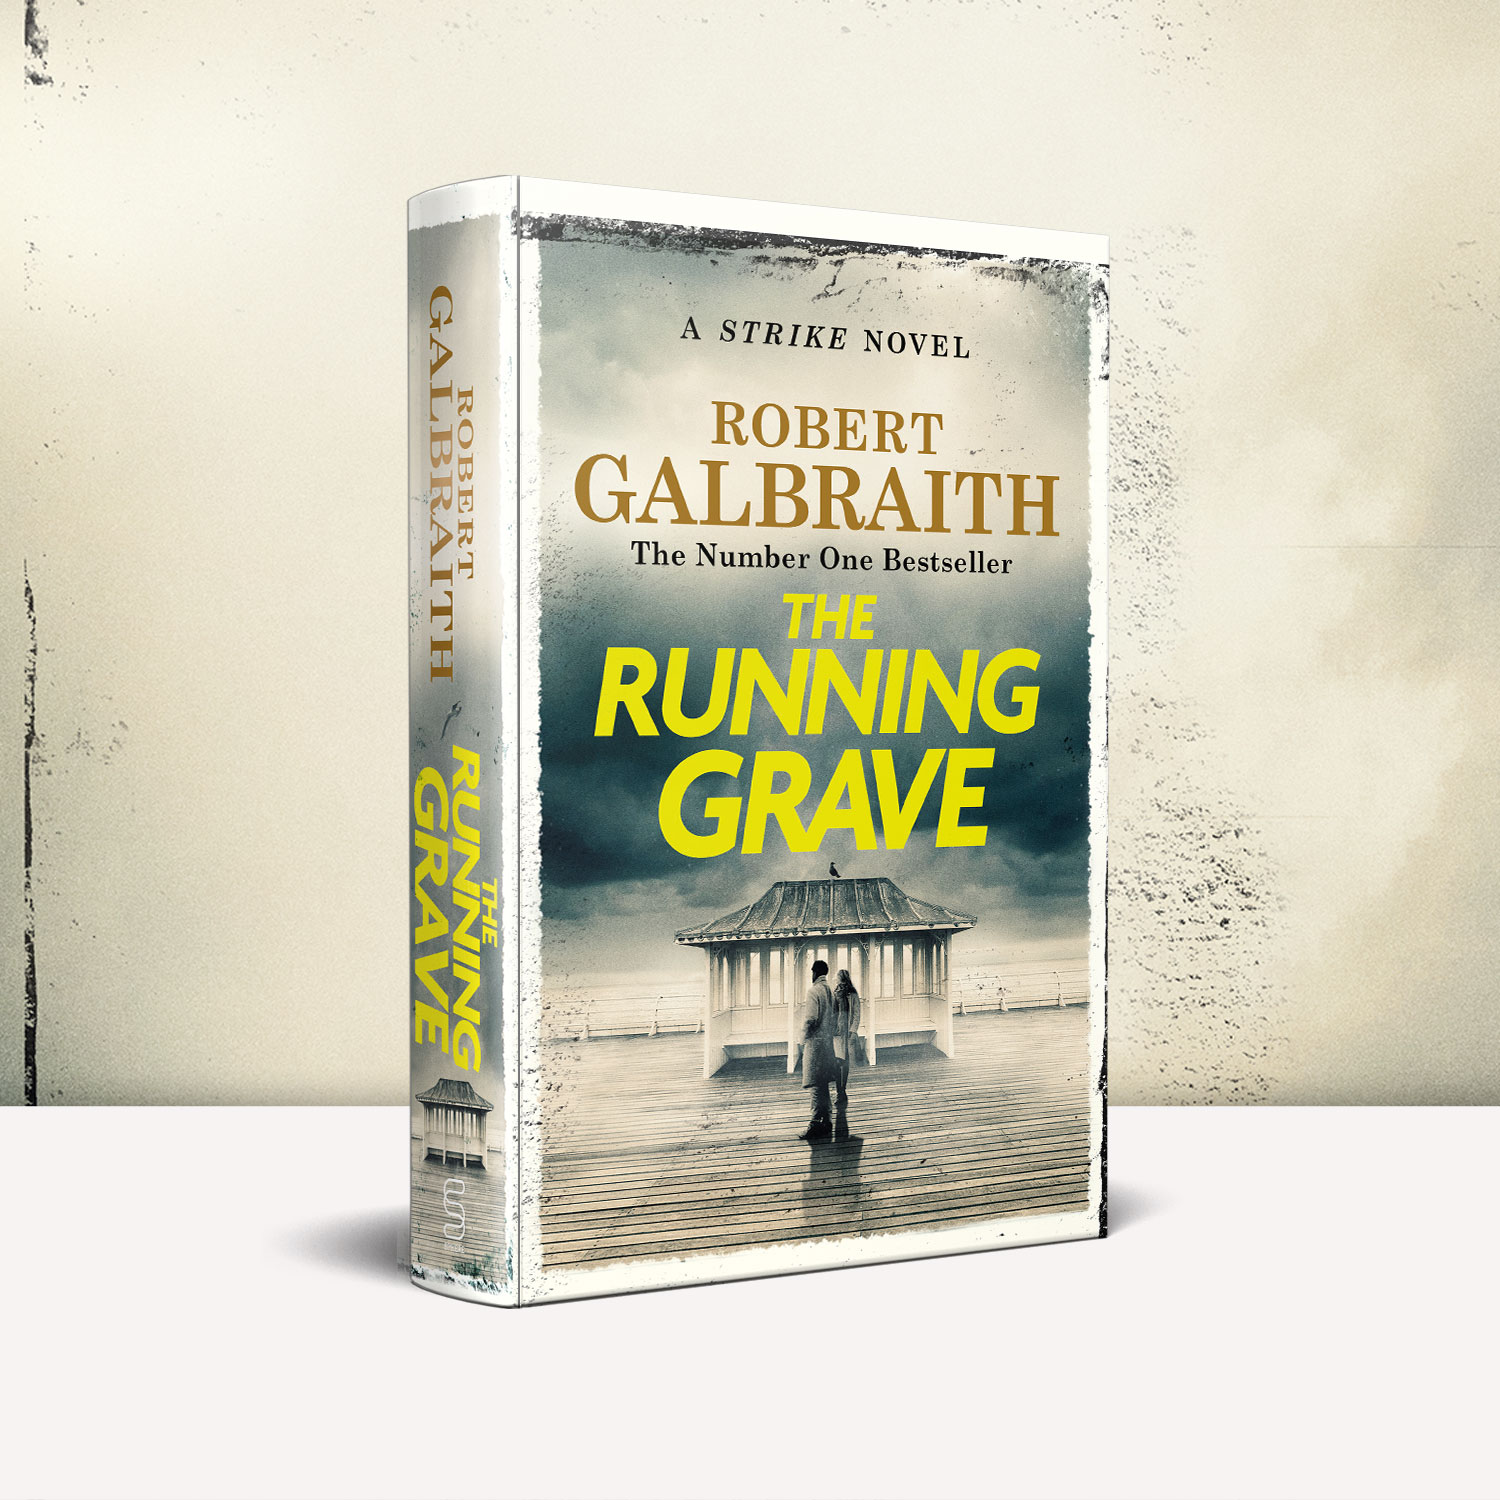 New Galbraith book, The Running Grave